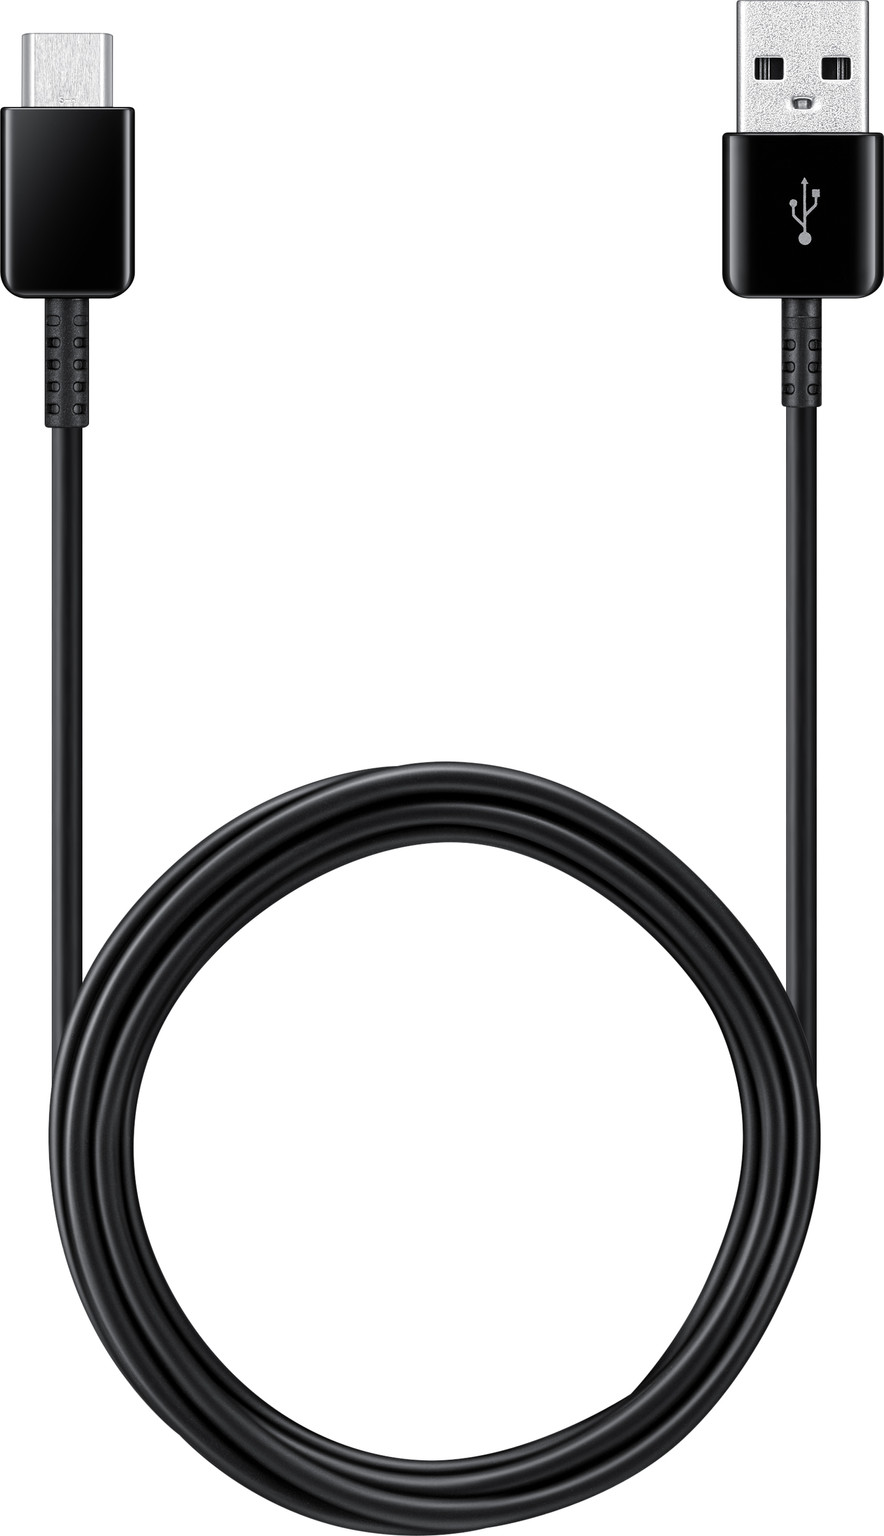 Reserveren uniek uit Samsung Galaxy A5 (2017) Oplaadkabel USB C 2 meter zwart - Gsm-Oplader.nl